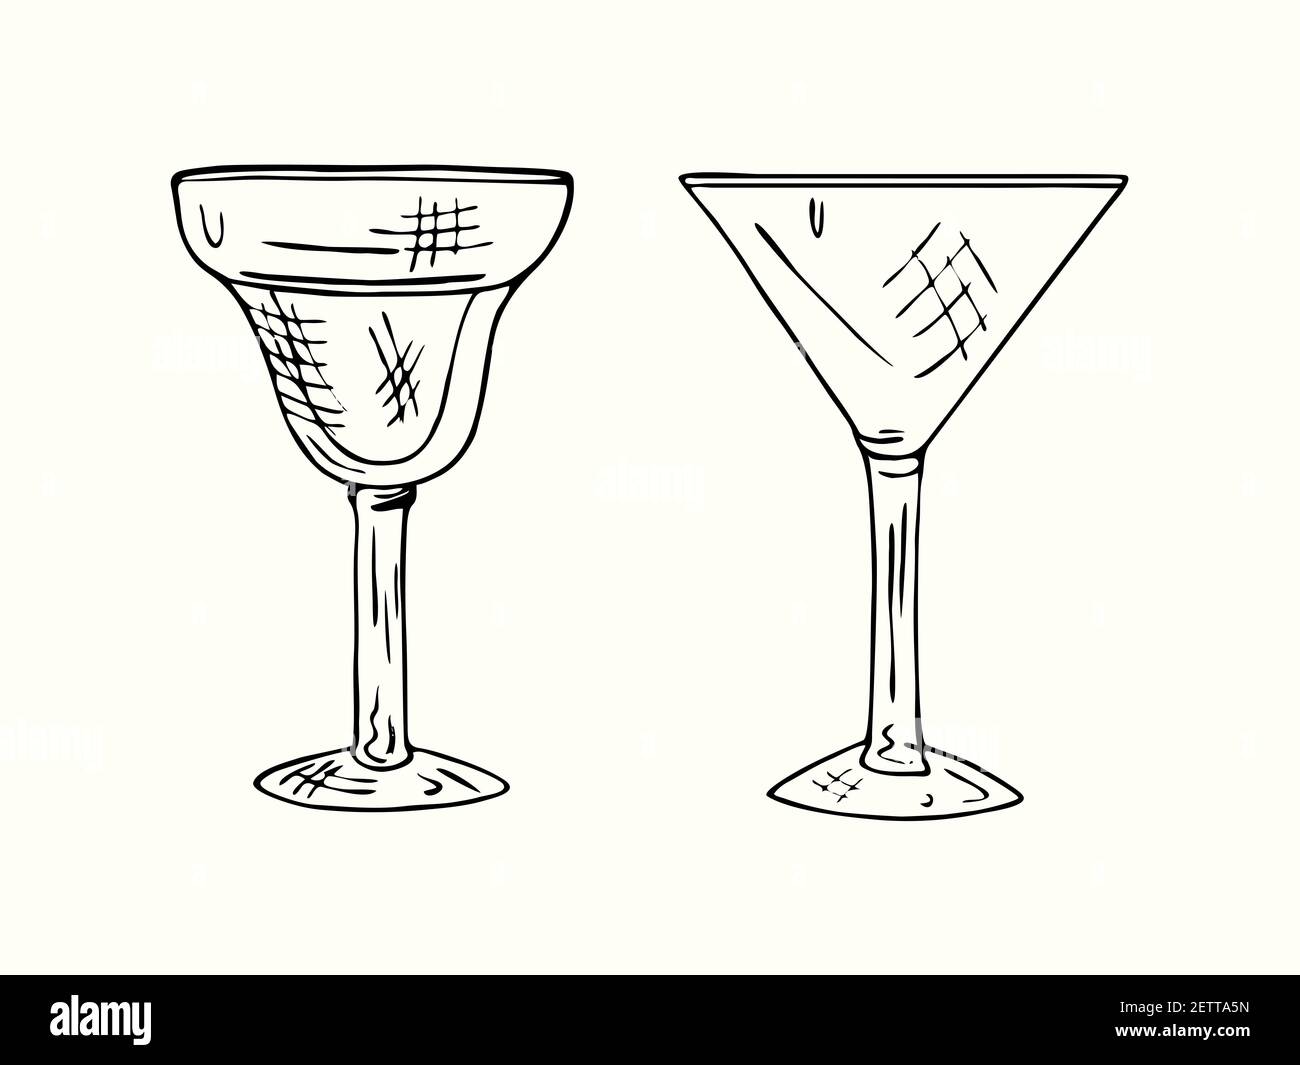 Martini Glass Dimensions & Drawings